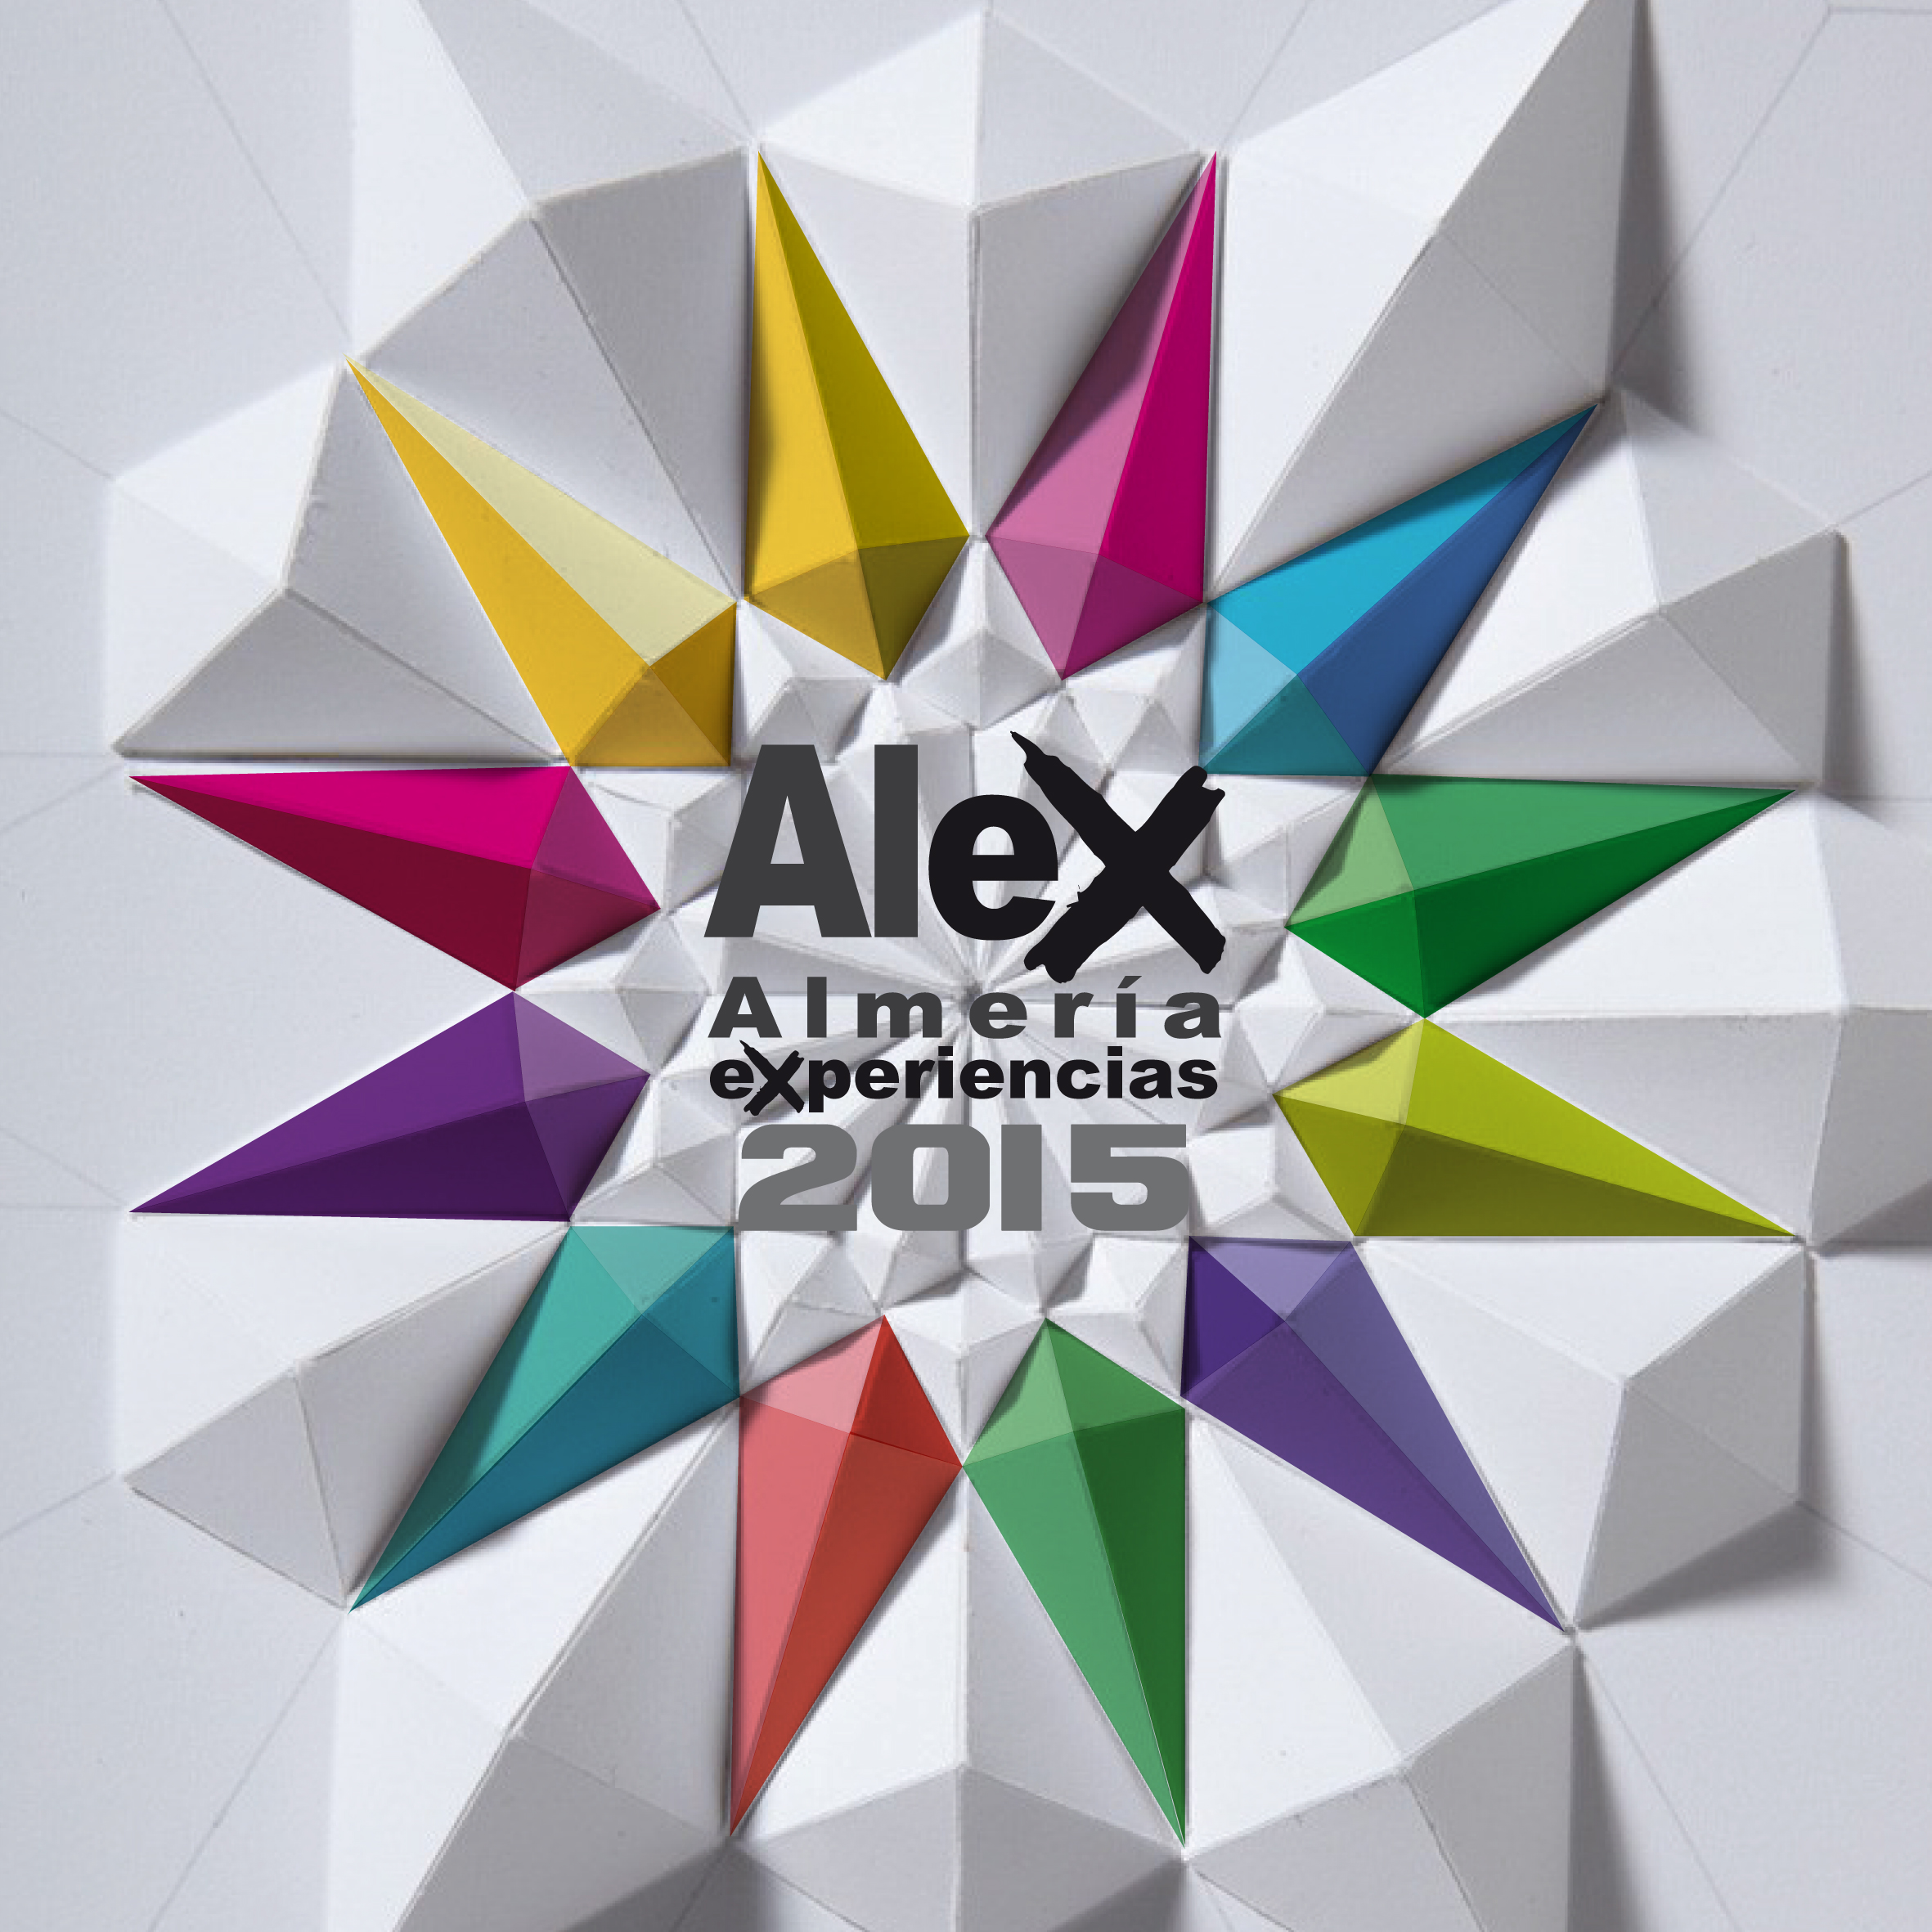 Cartel anunciador del programa Alex 2015